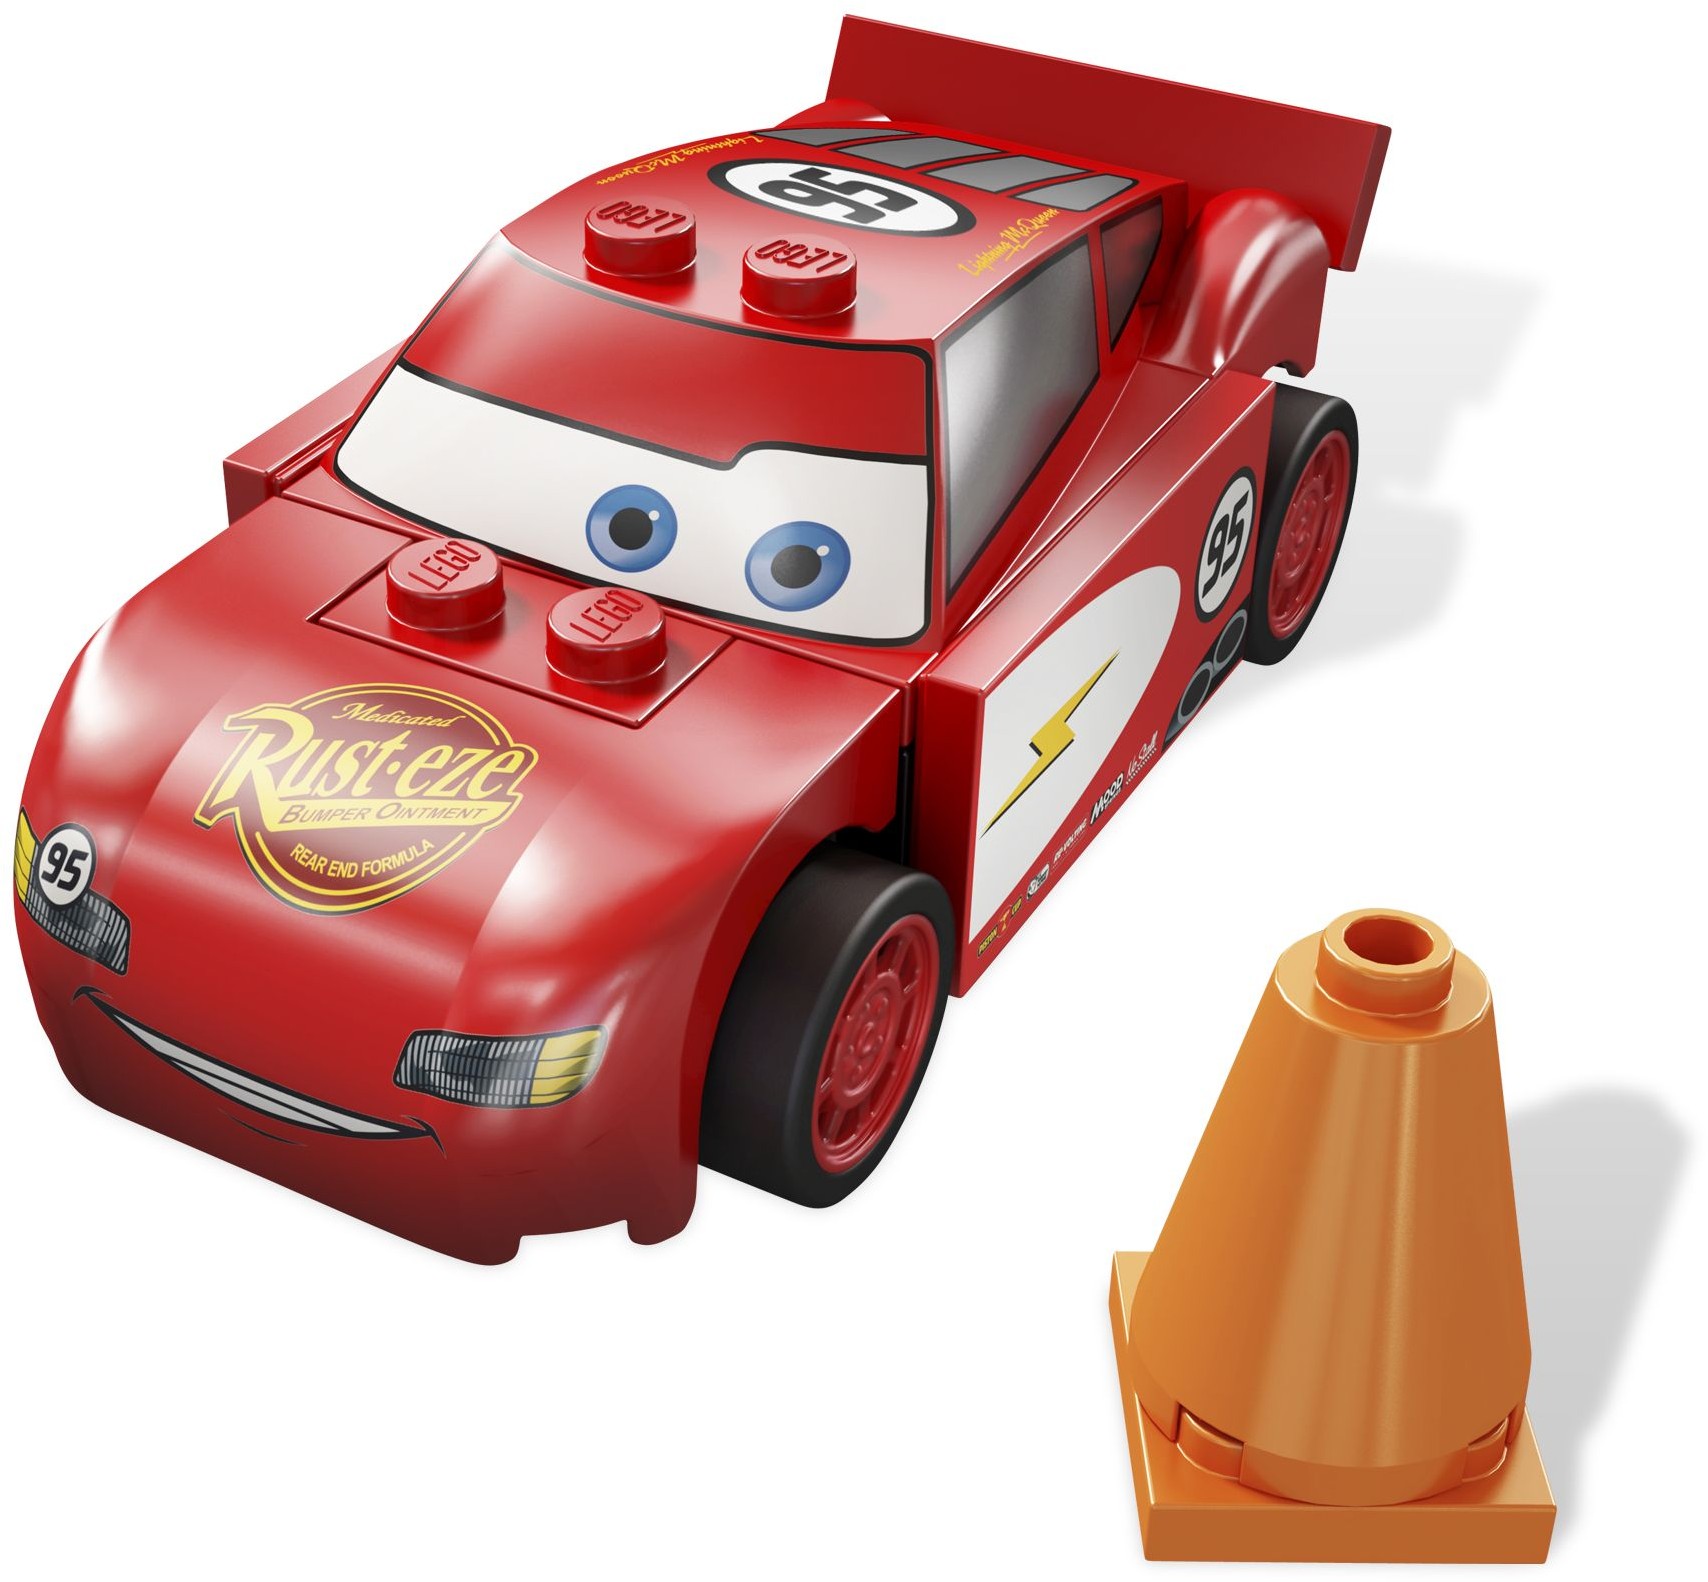 LEGO Cars: Ultimate Build Francesco 8678 New In Box